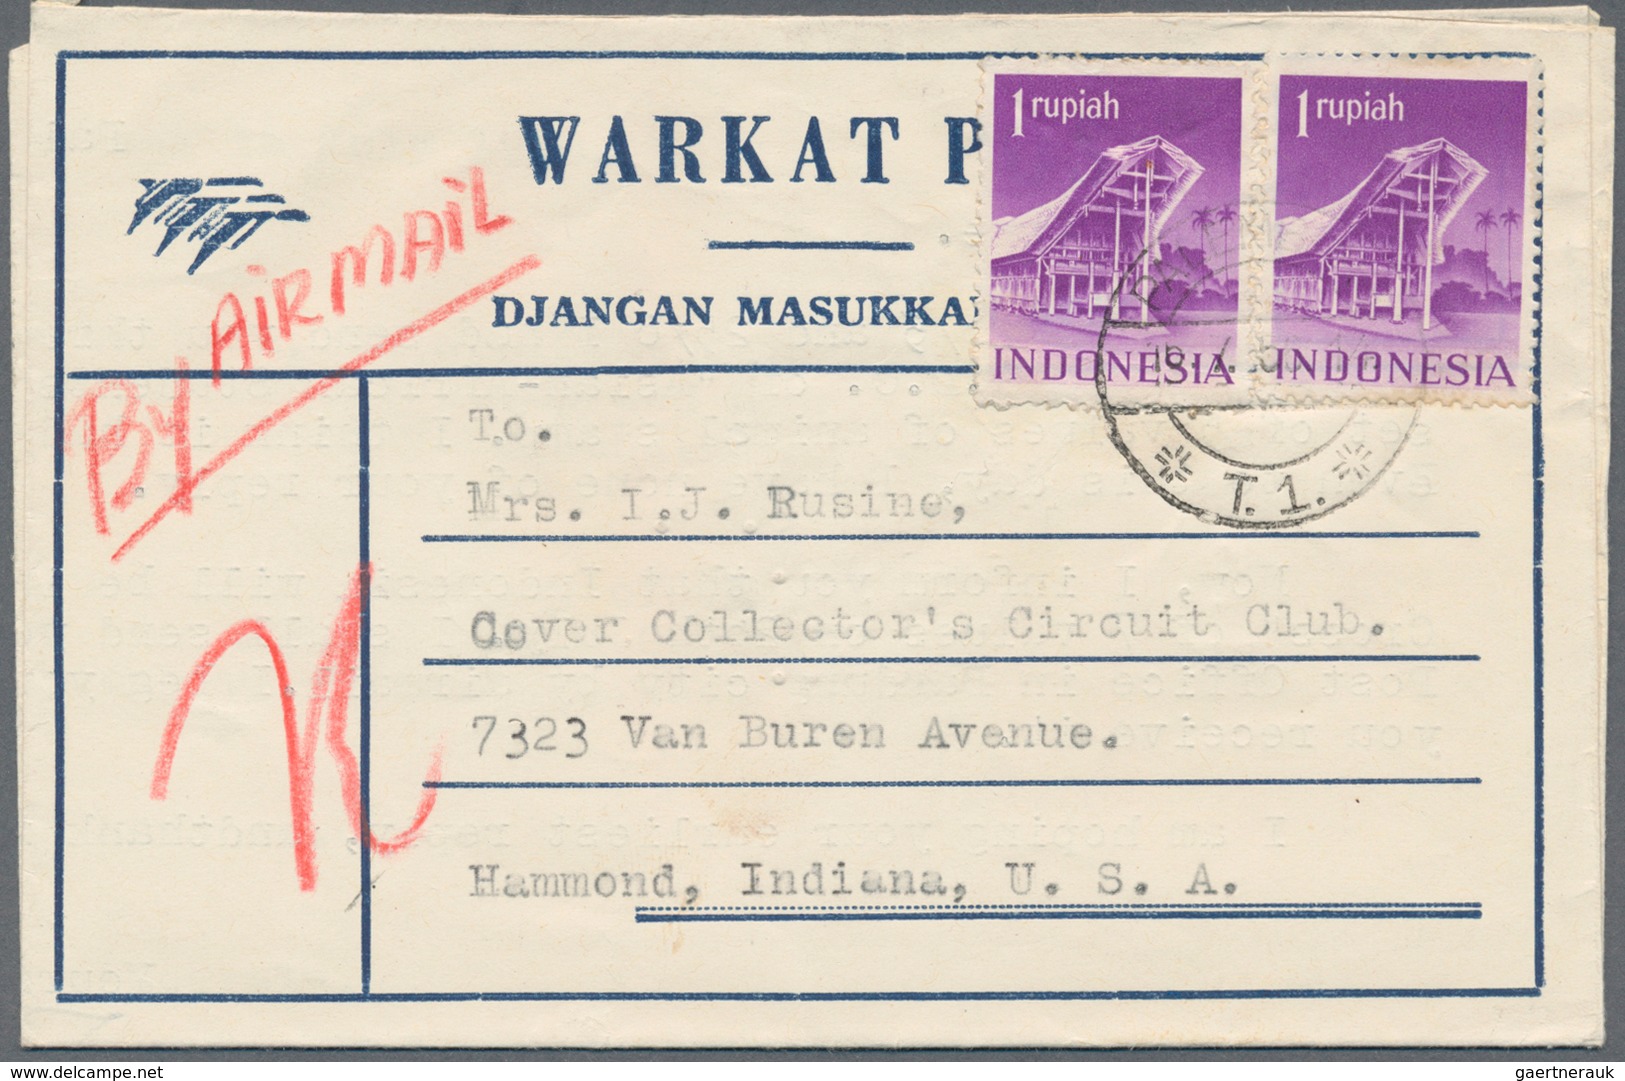 22781 Indonesien: 1949/97 (ca.), stationery envelopes (warkat pos / postblad) specialized stock: 10 S. (mi